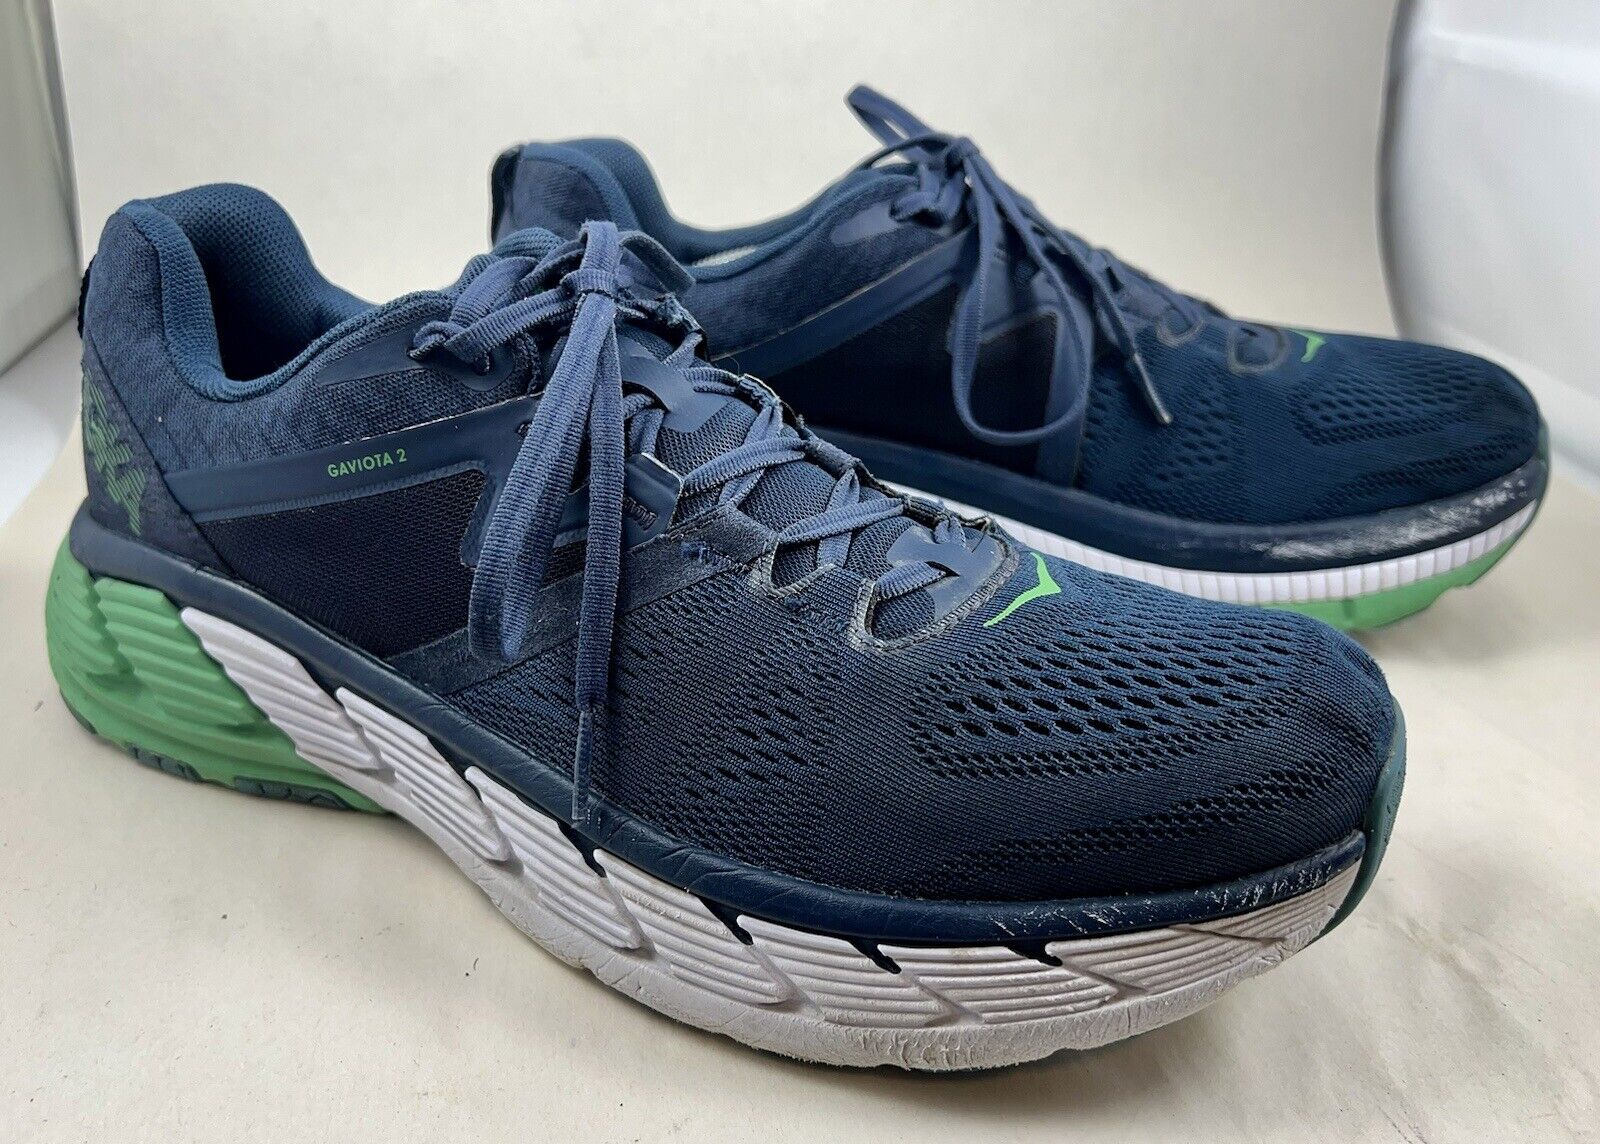 Hoka One One Mens Size 13 Gaviota 2 1099629 Blue Green Walking Running Shoes